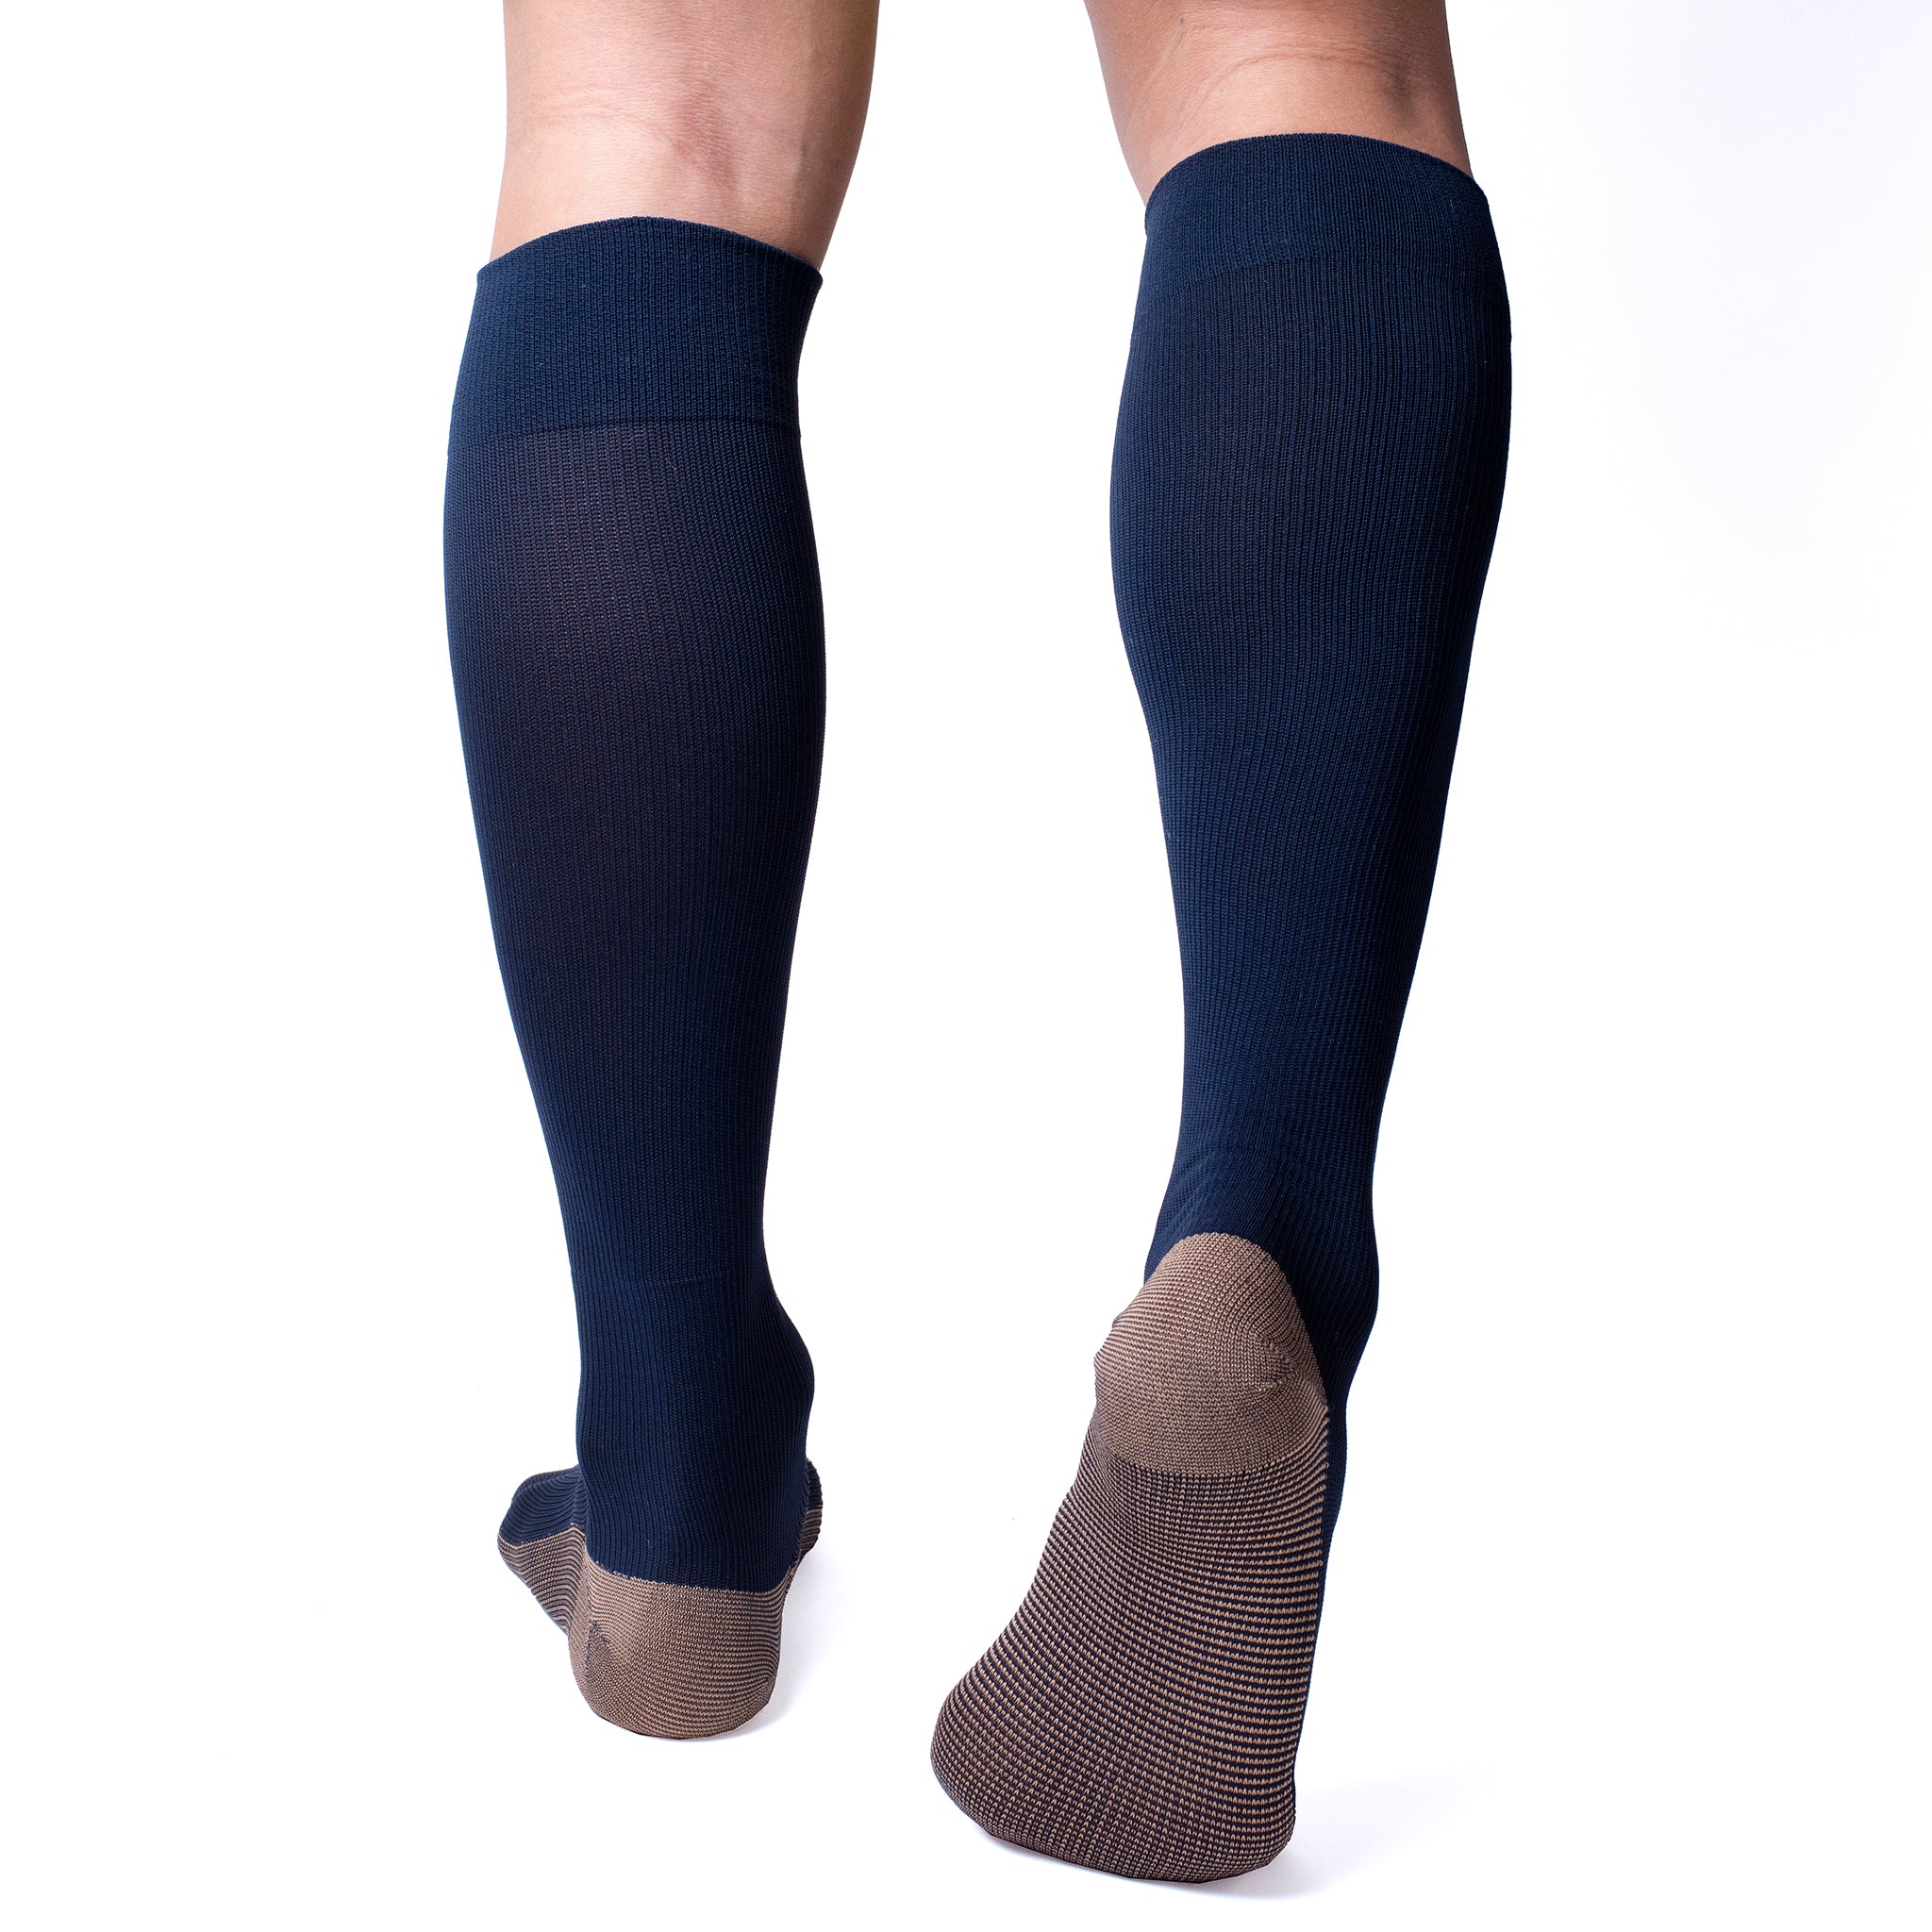 Benefits of Copper Yarn in Socks